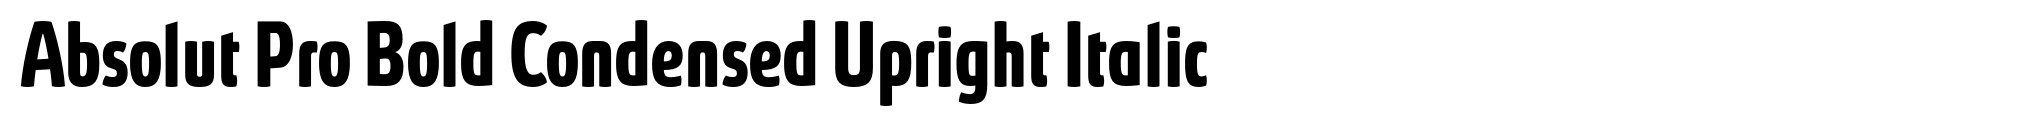 Absolut Pro Bold Condensed Upright Italic image